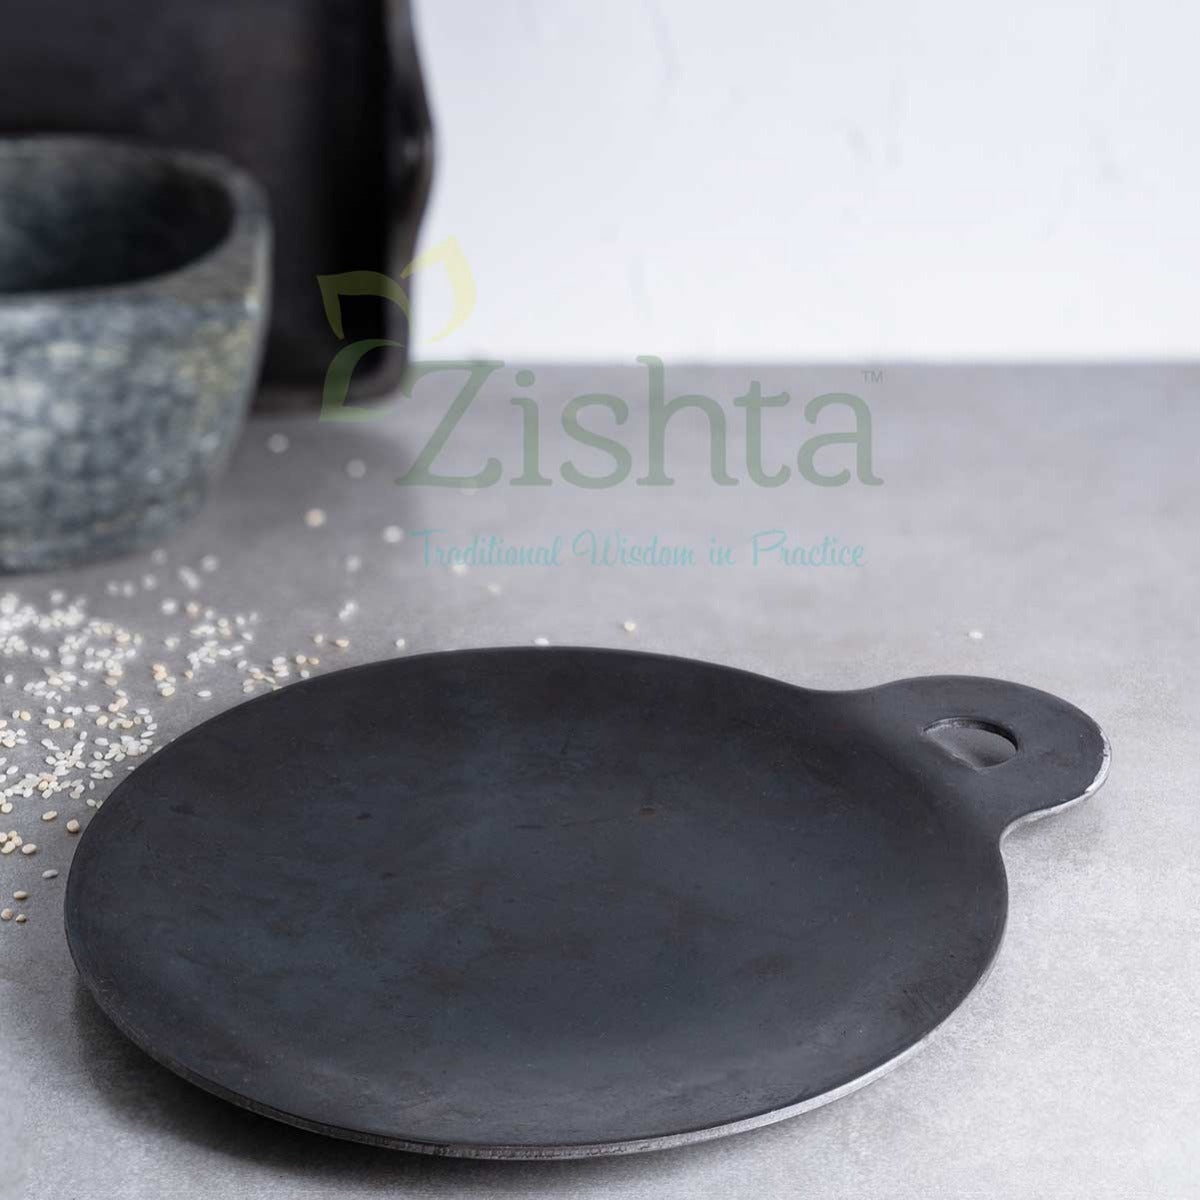 Zishta Cast Iron Grill Pan, Shop Online